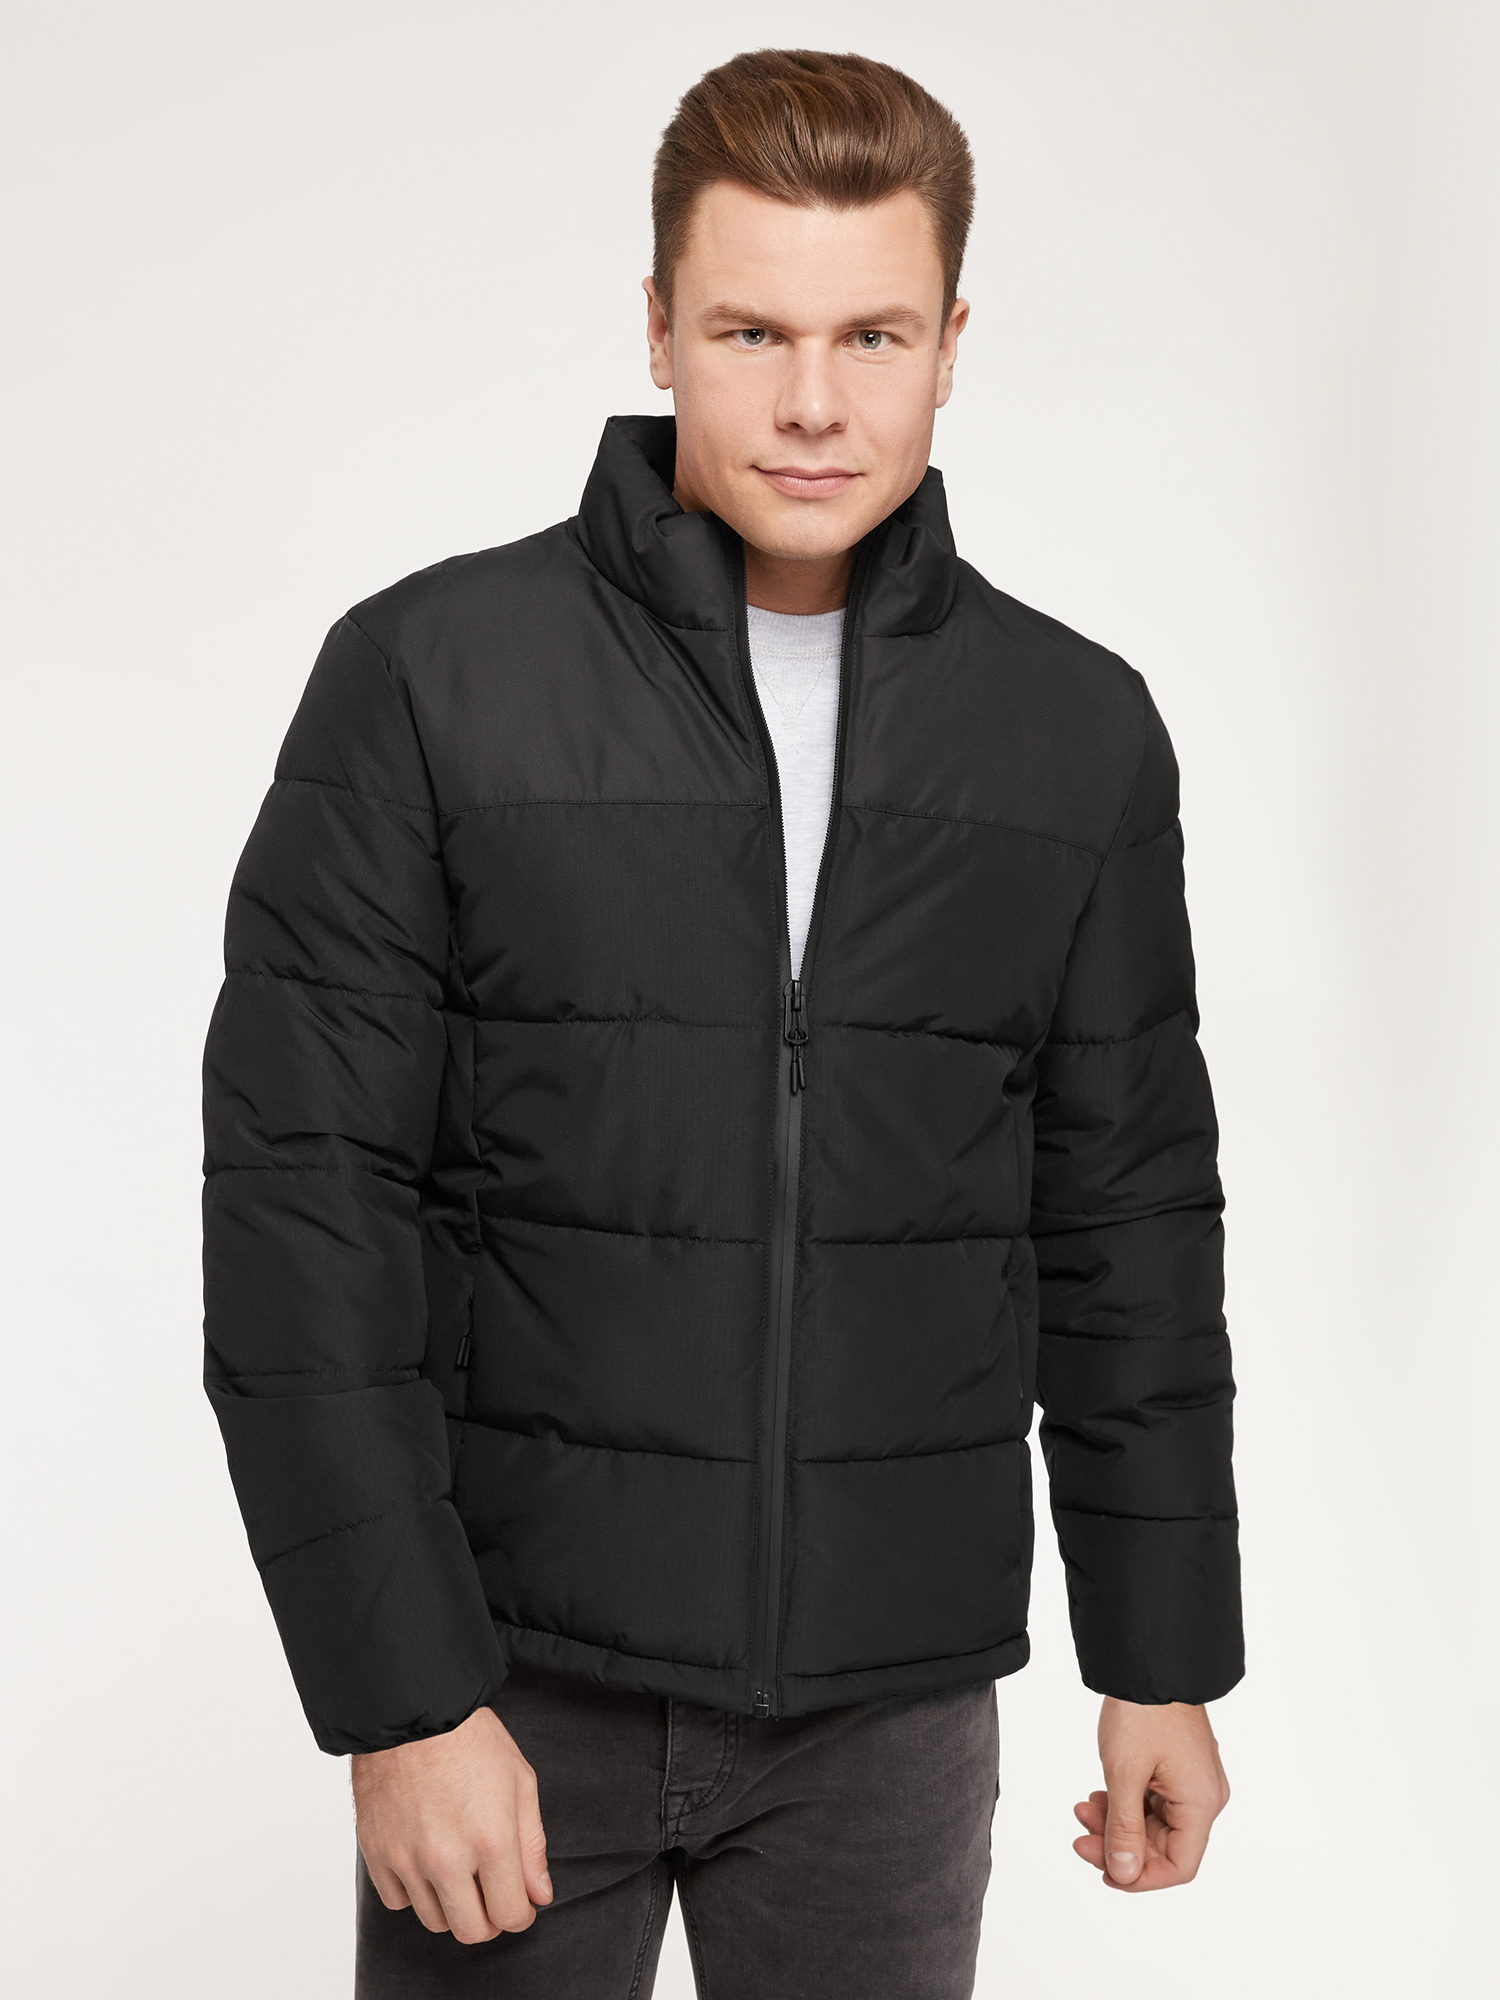 Куртка мужская oodji 1L121005M-1 черная L